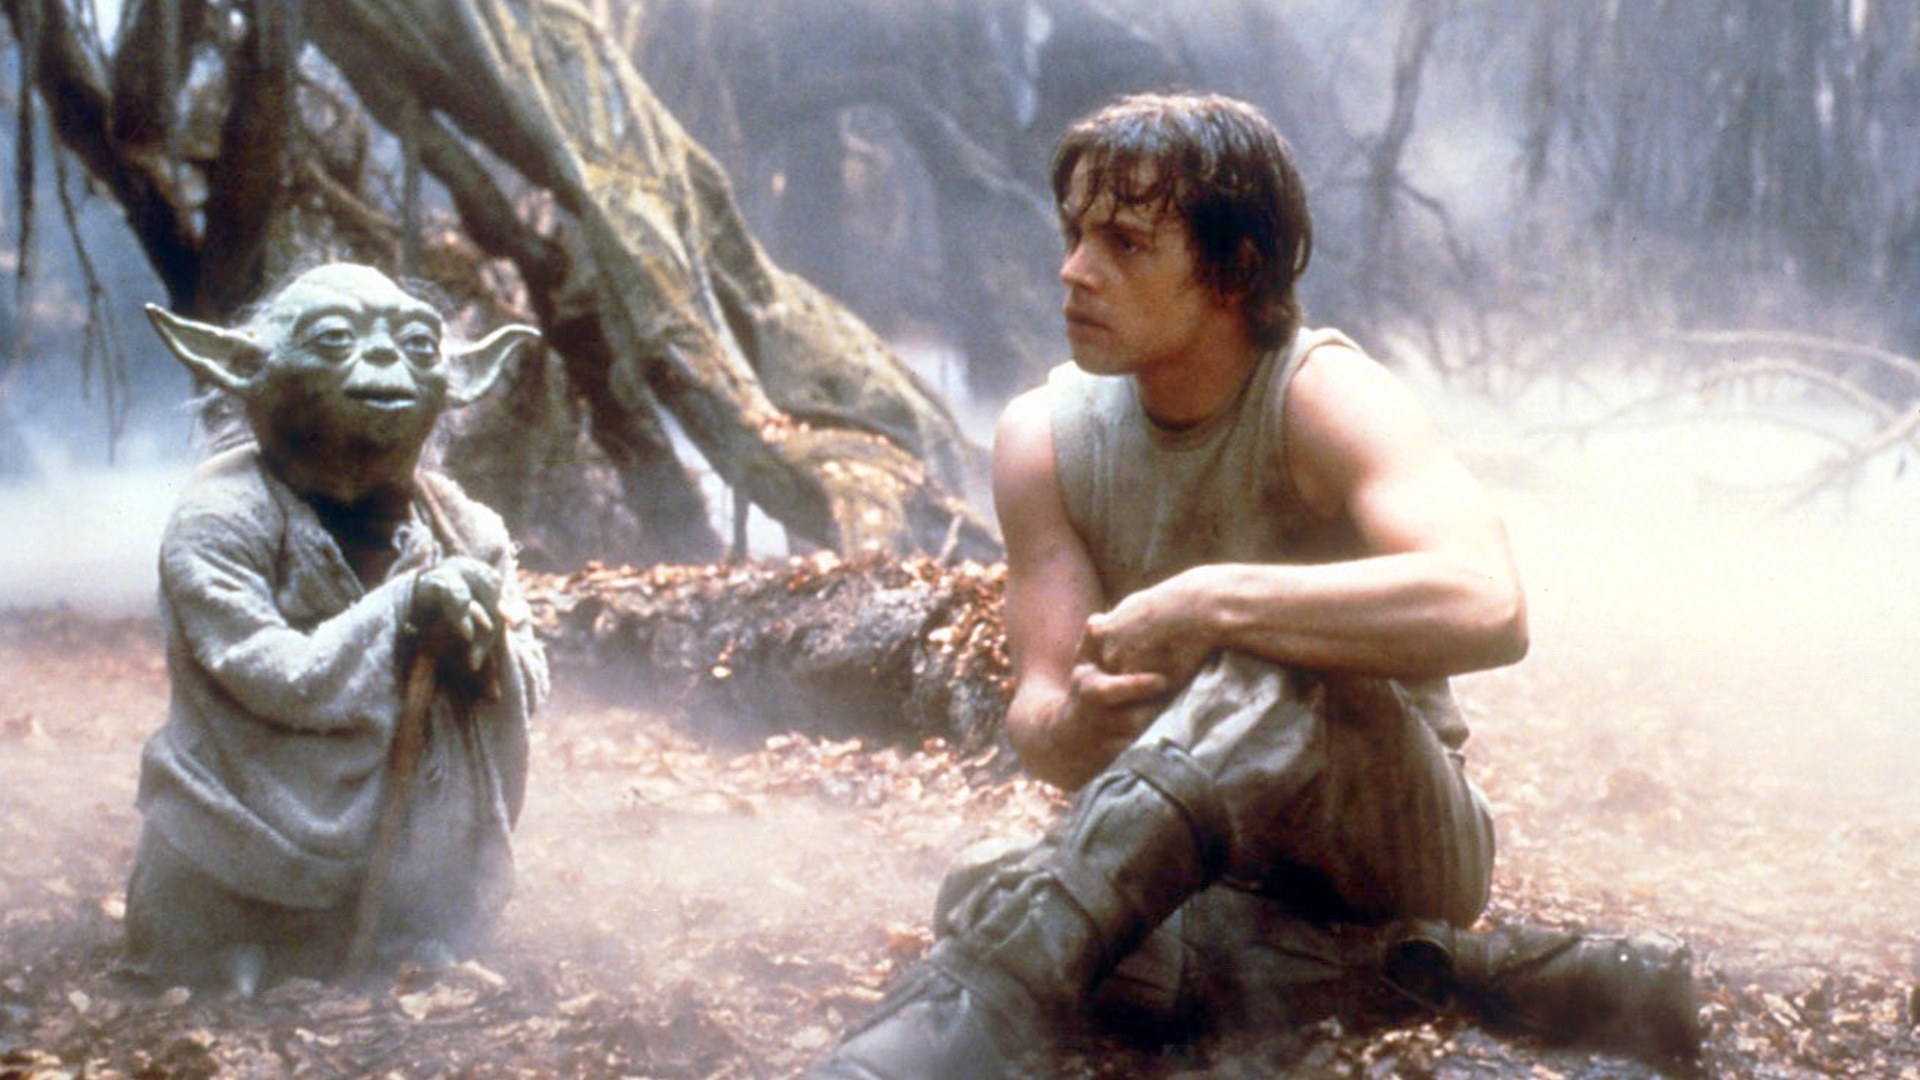 Luke and Yoda training at the swamp